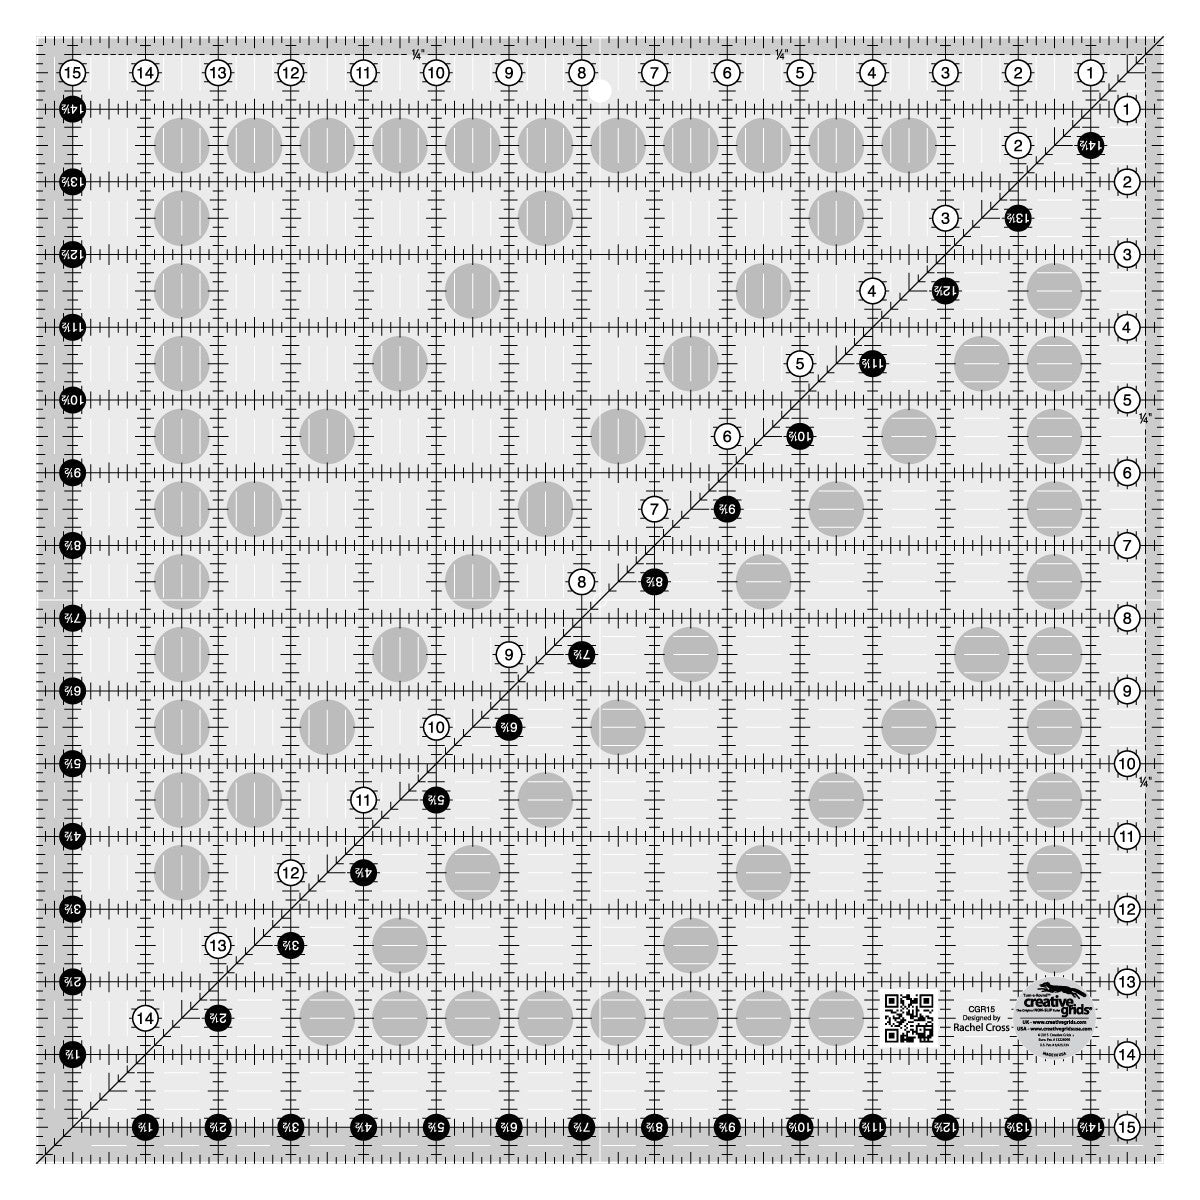 Creative Grids 15 1/2 Square Ruler